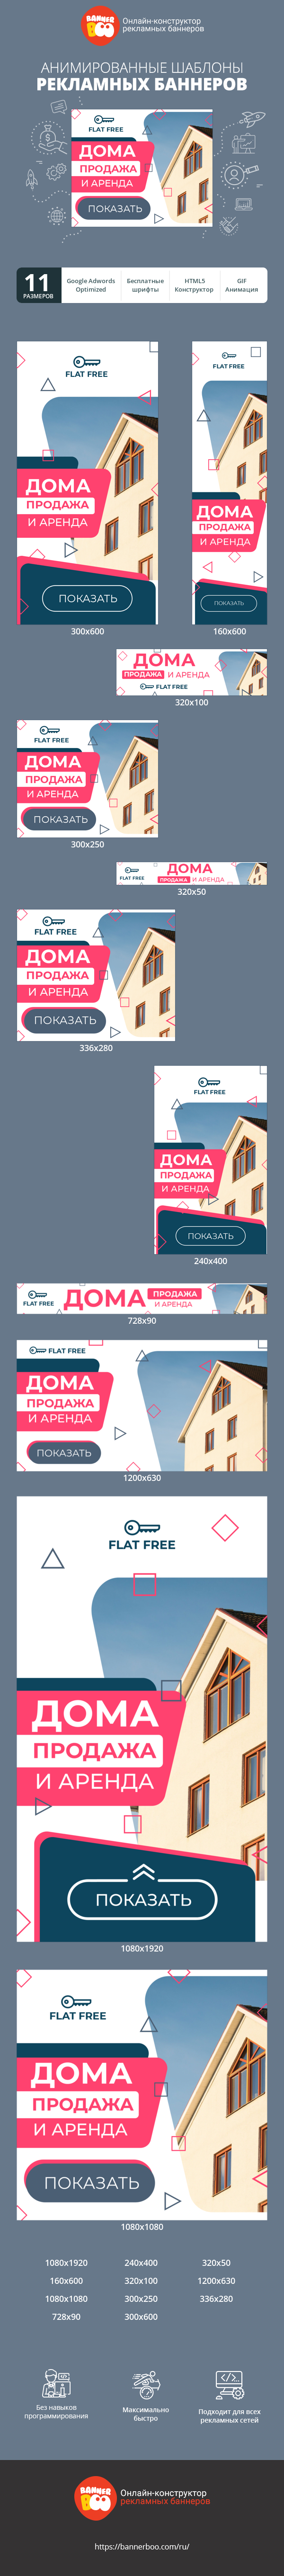 Шаблон рекламного баннера — Дома — продажа и аренда